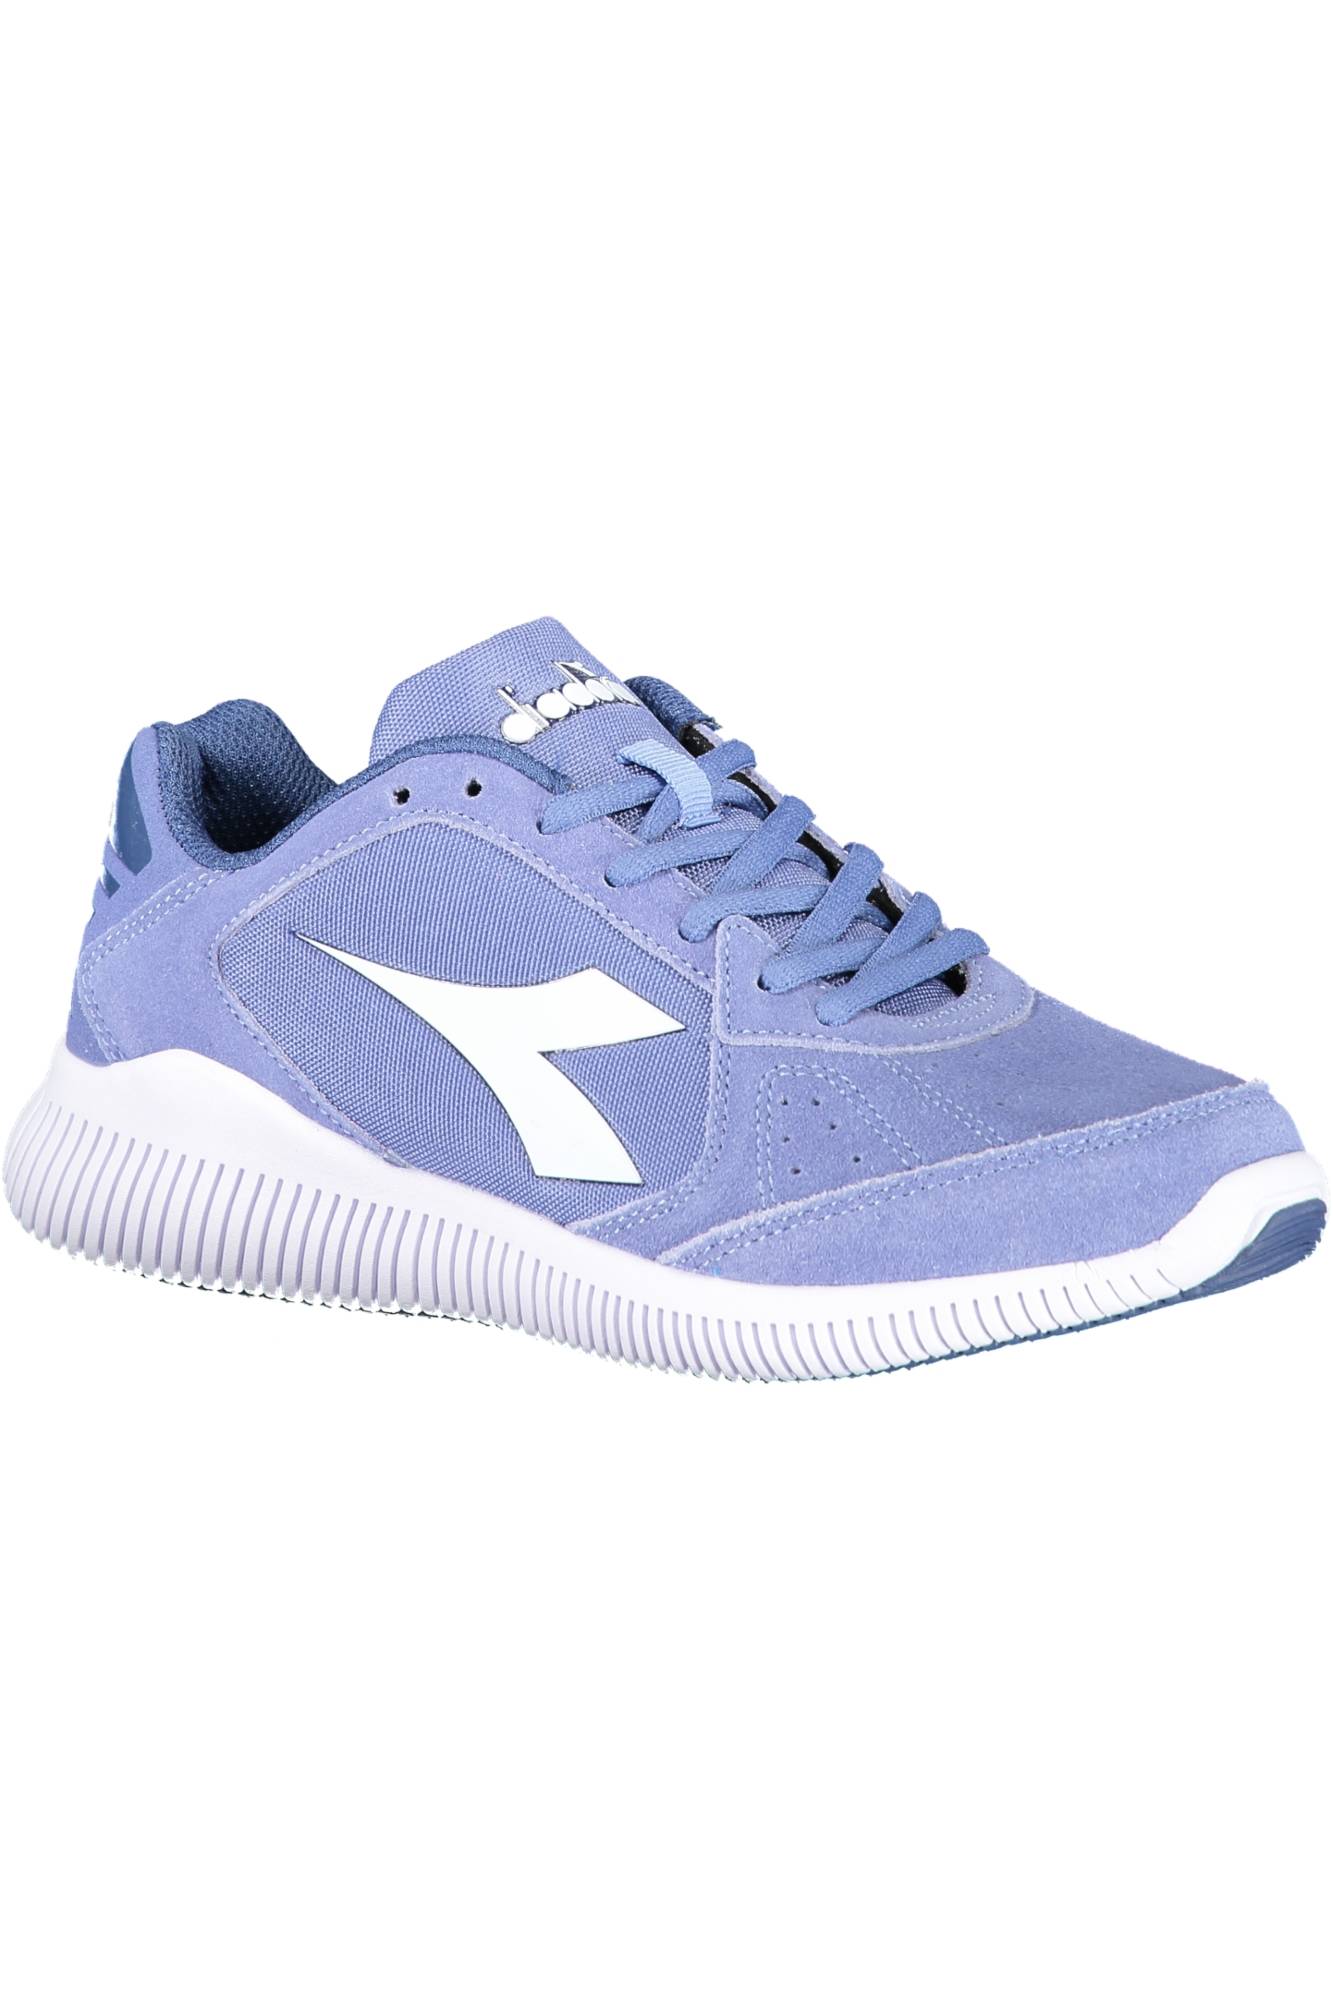 Diadora Light Blue Women'S Sports Shoes-Shoes - Women-DIADORA-LIGHT BLUE-36-Urbanheer